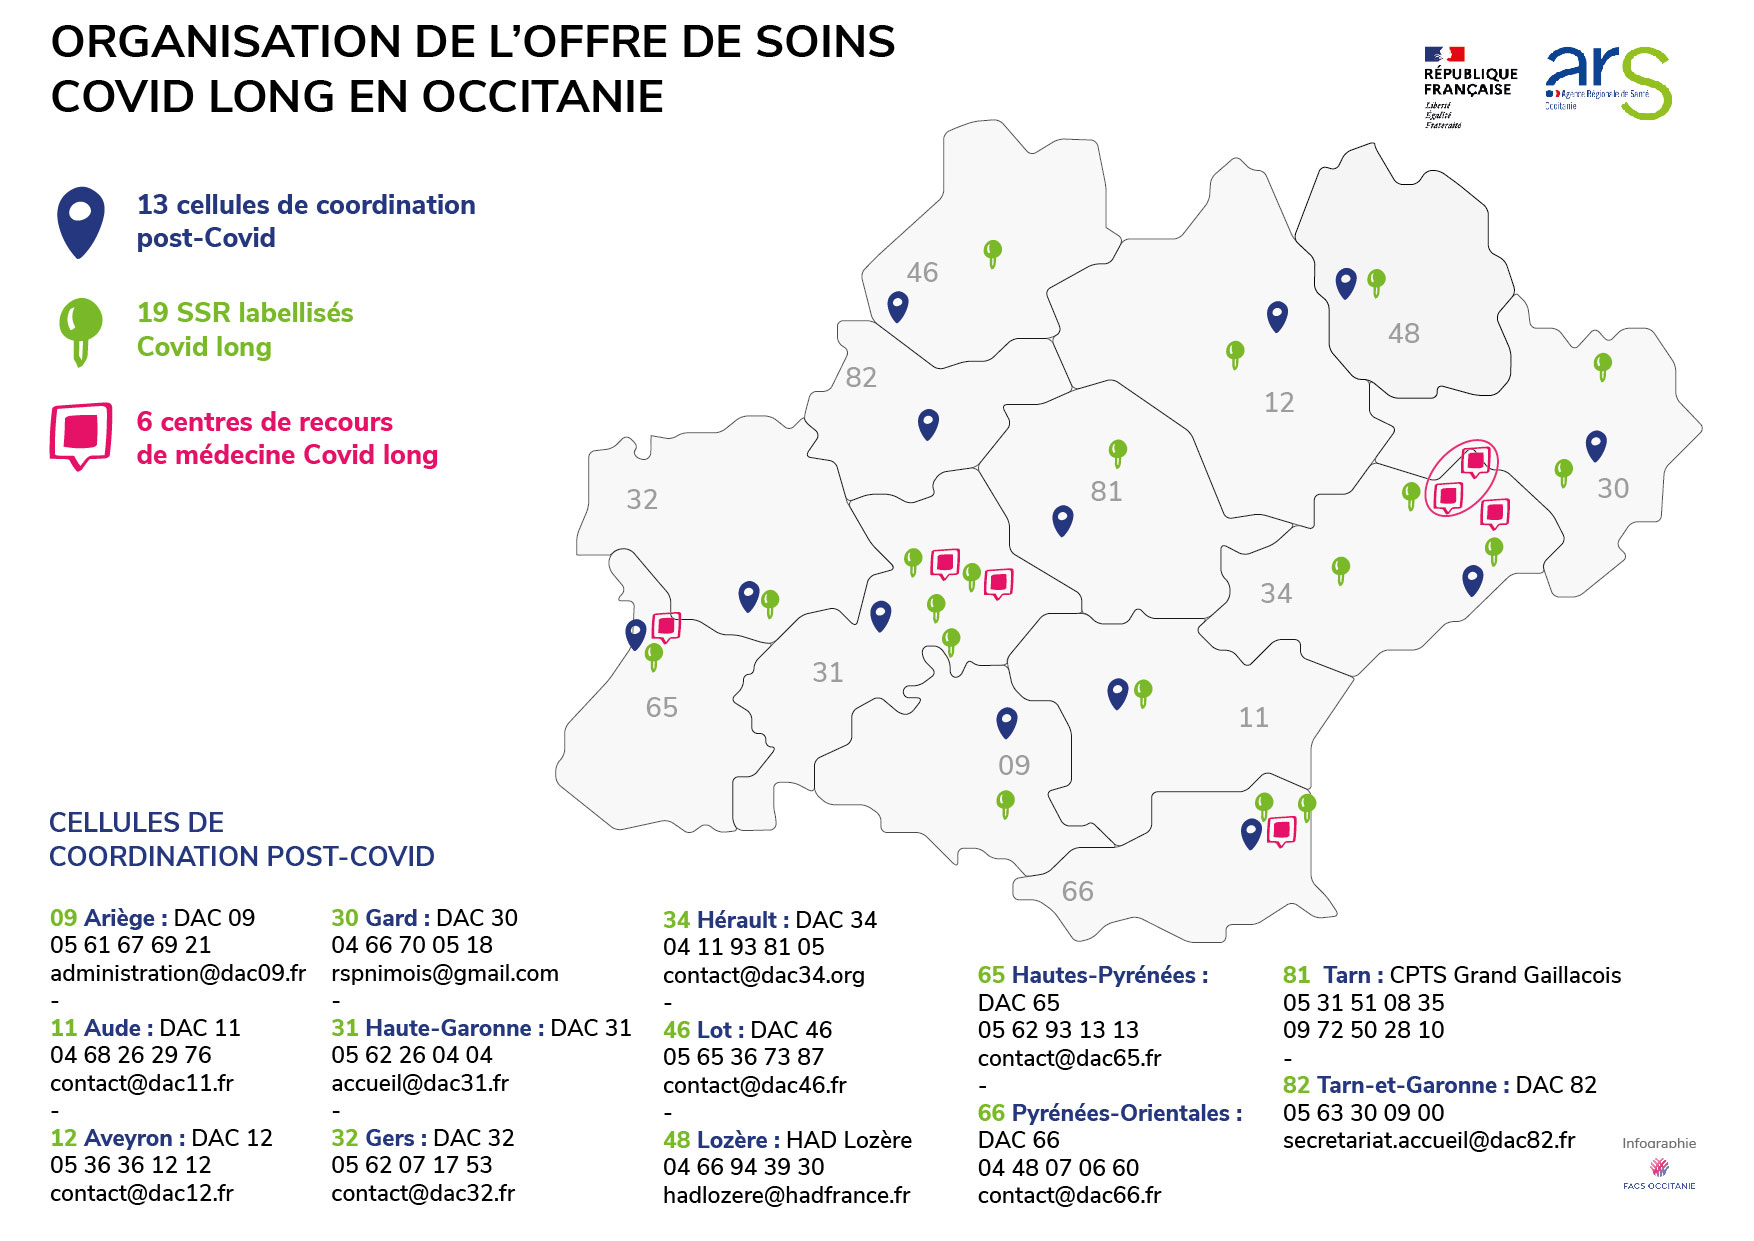 Consultez la cartographie Covid long en Occitanie (PDF, 603.74 Ko)